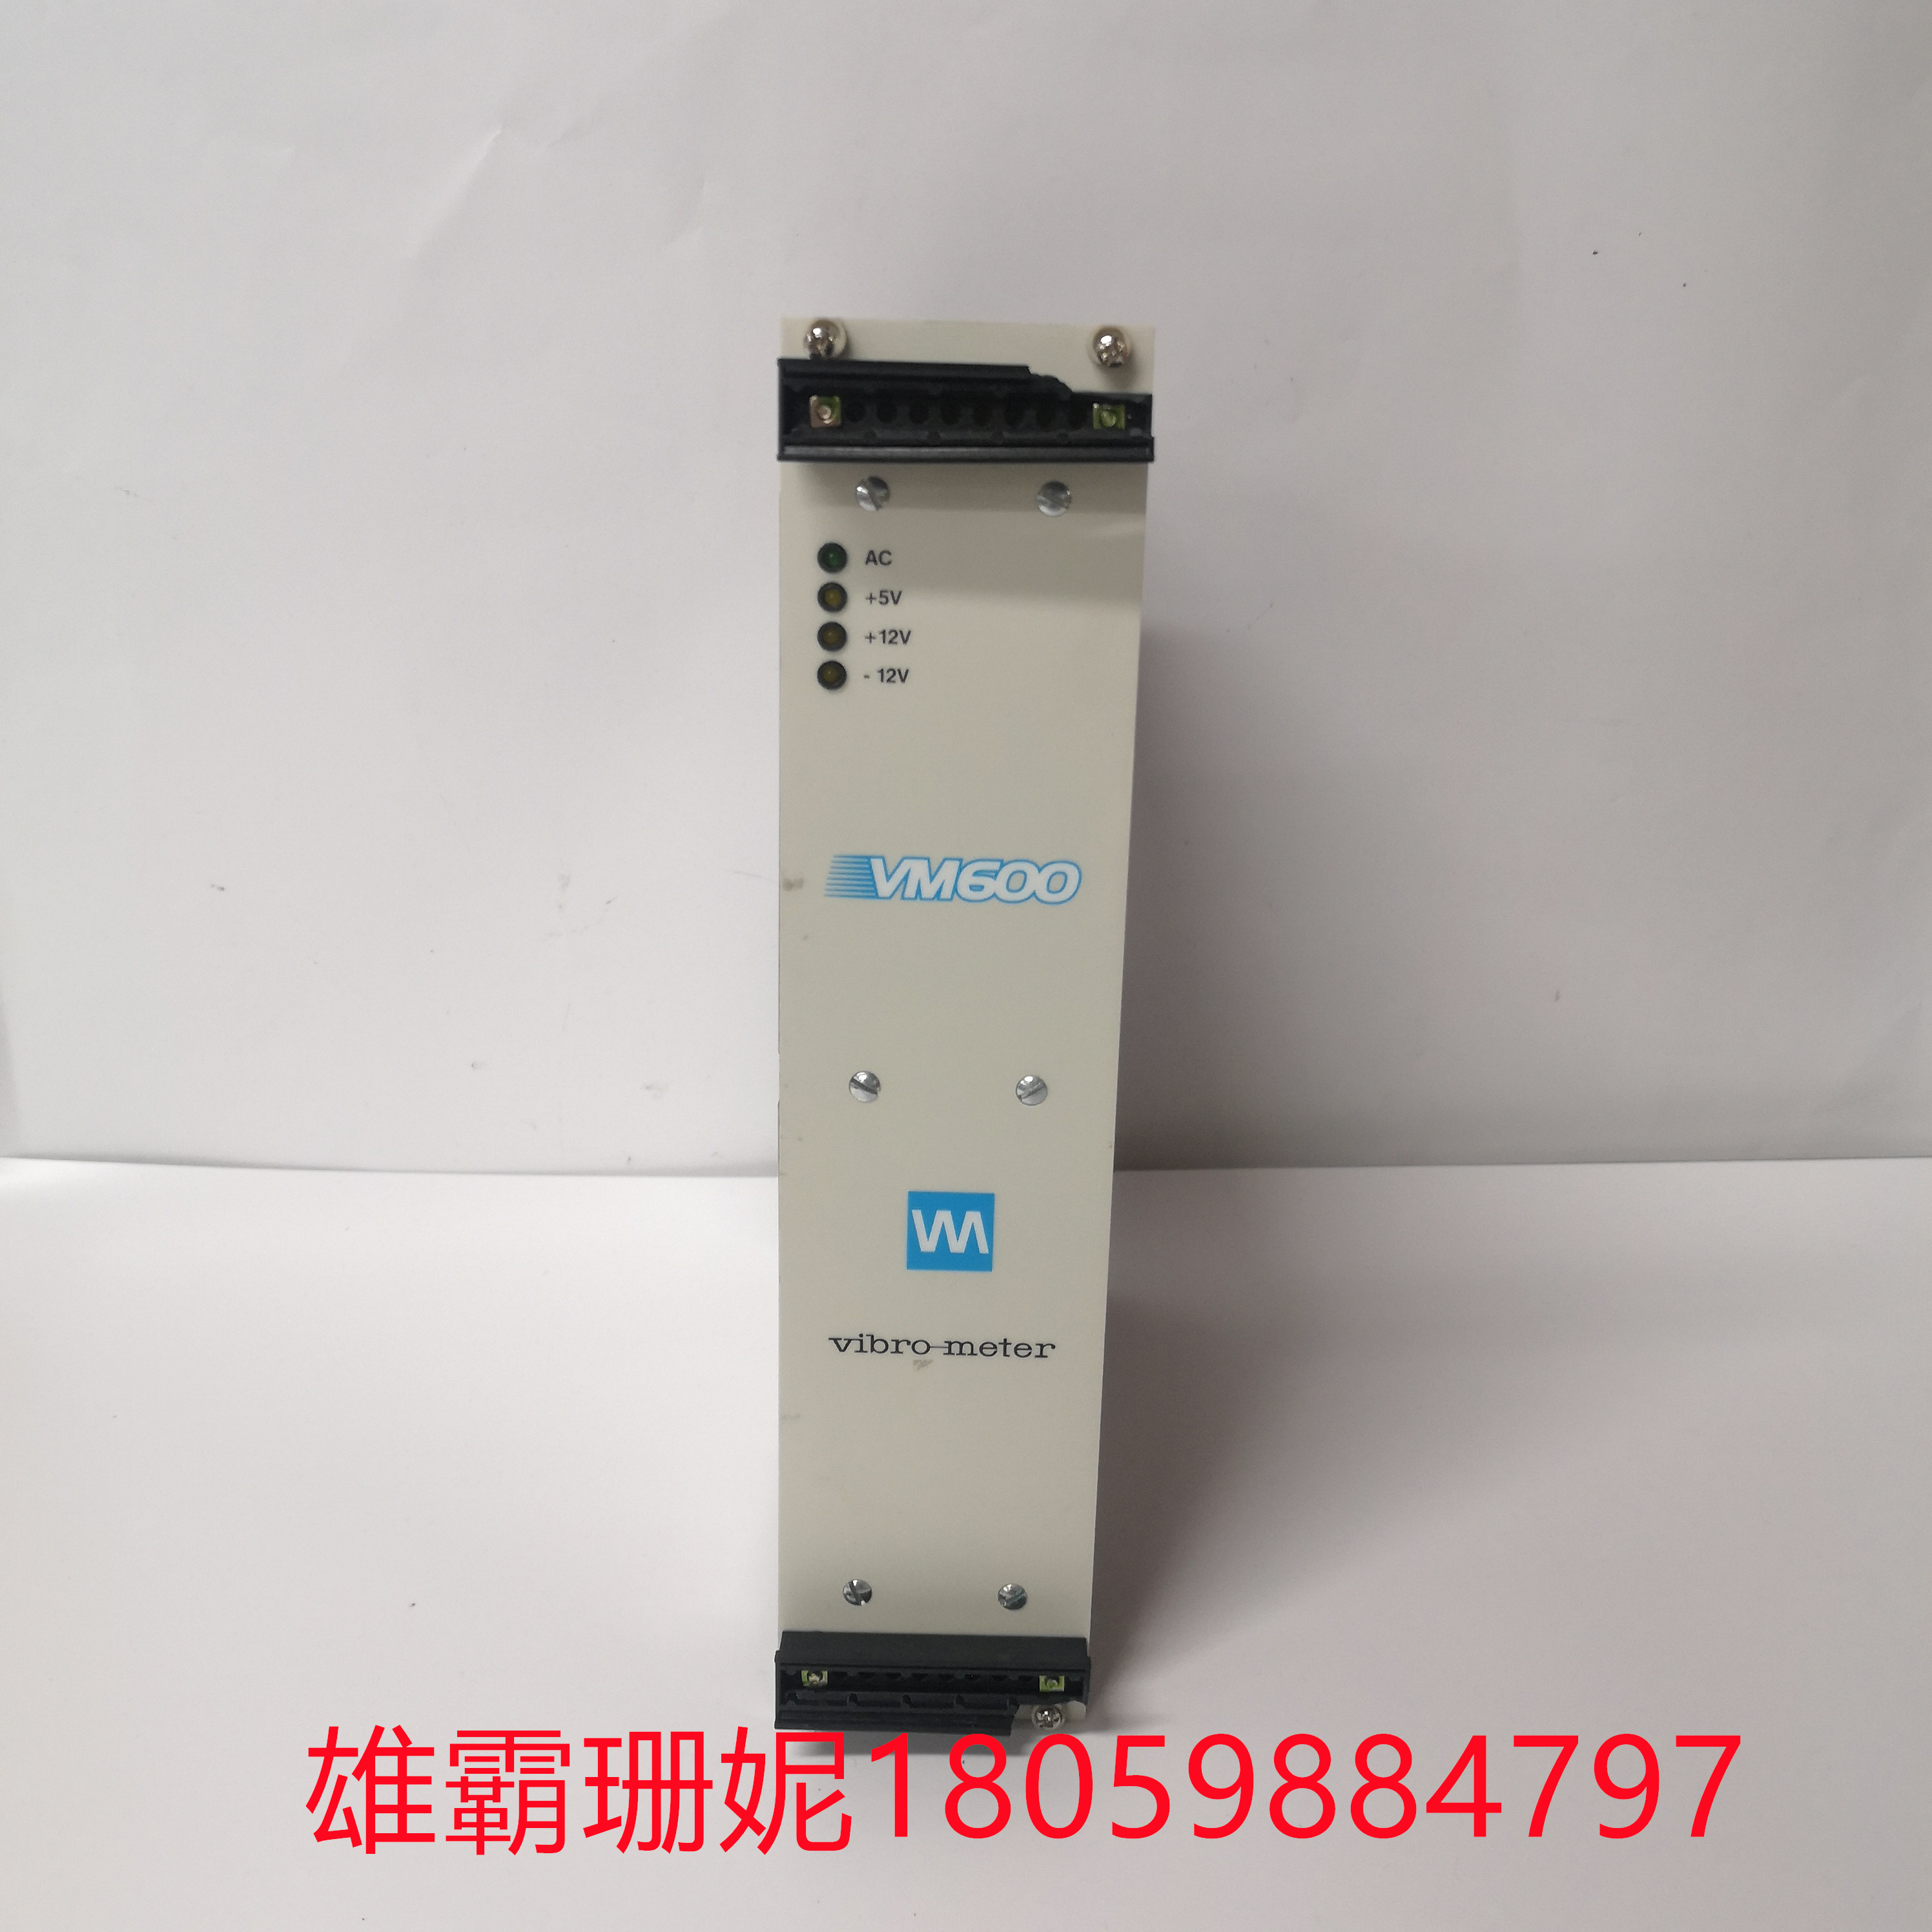 VIBRO-METER VM600 RPS6U 200-582-500-013  振动传感器